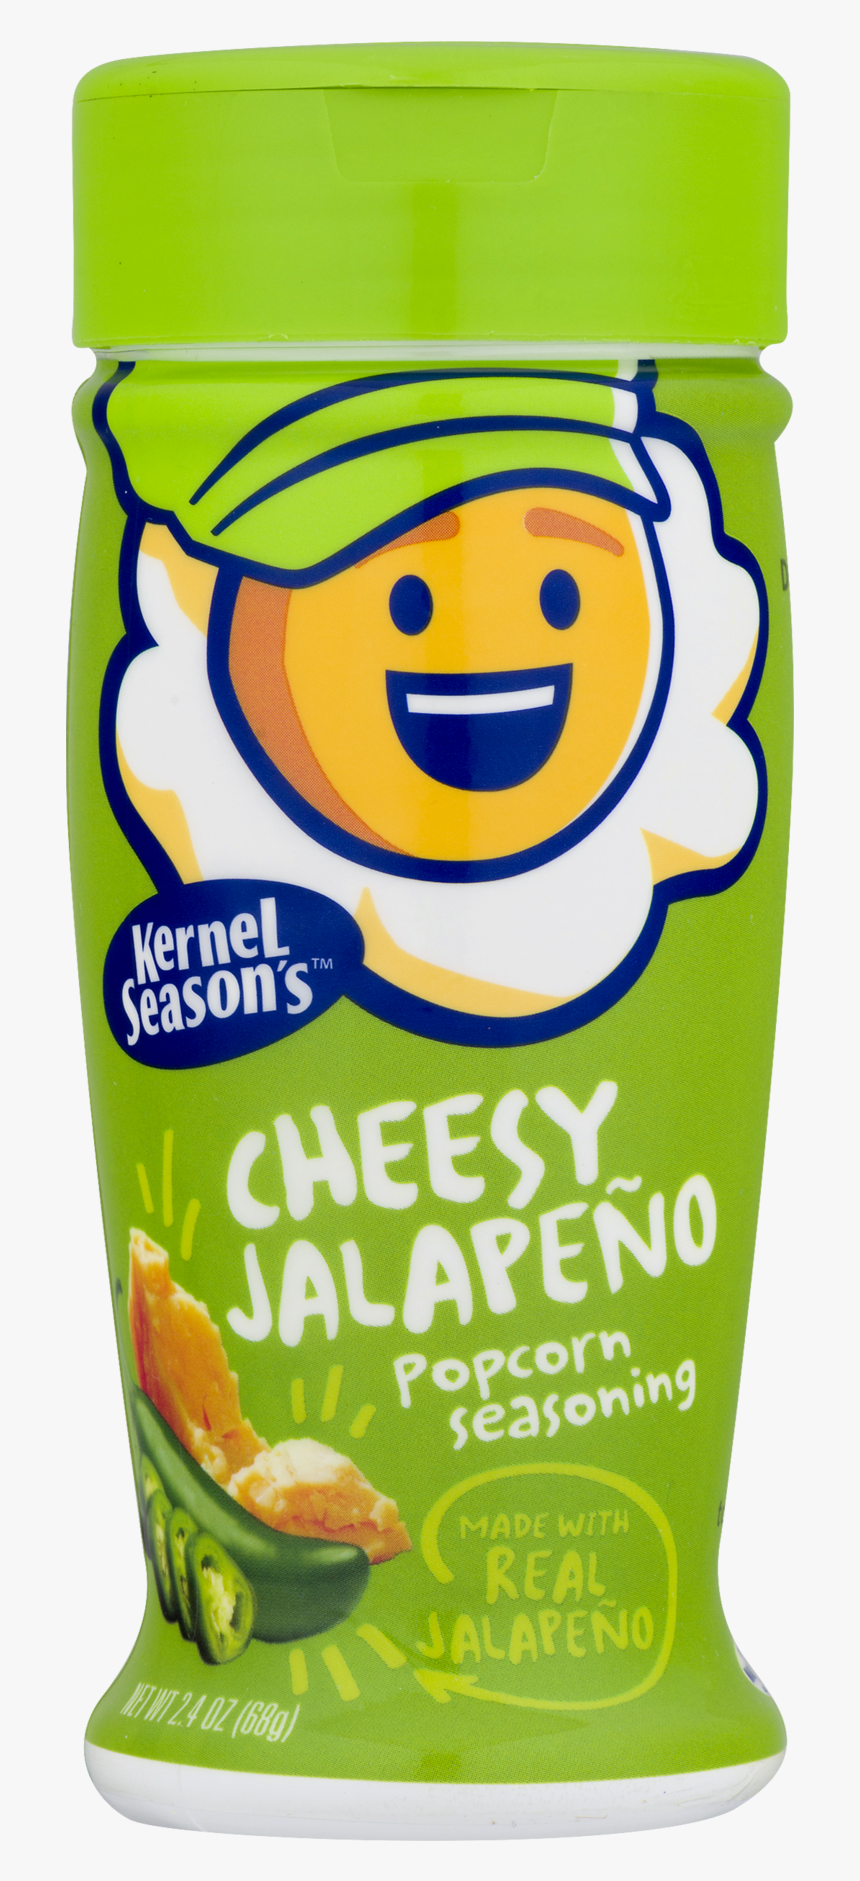 Kernel Season"s Cheesy Jalapeno Popcorn Seasoning - Vegetarian Food, HD Png Download, Free Download